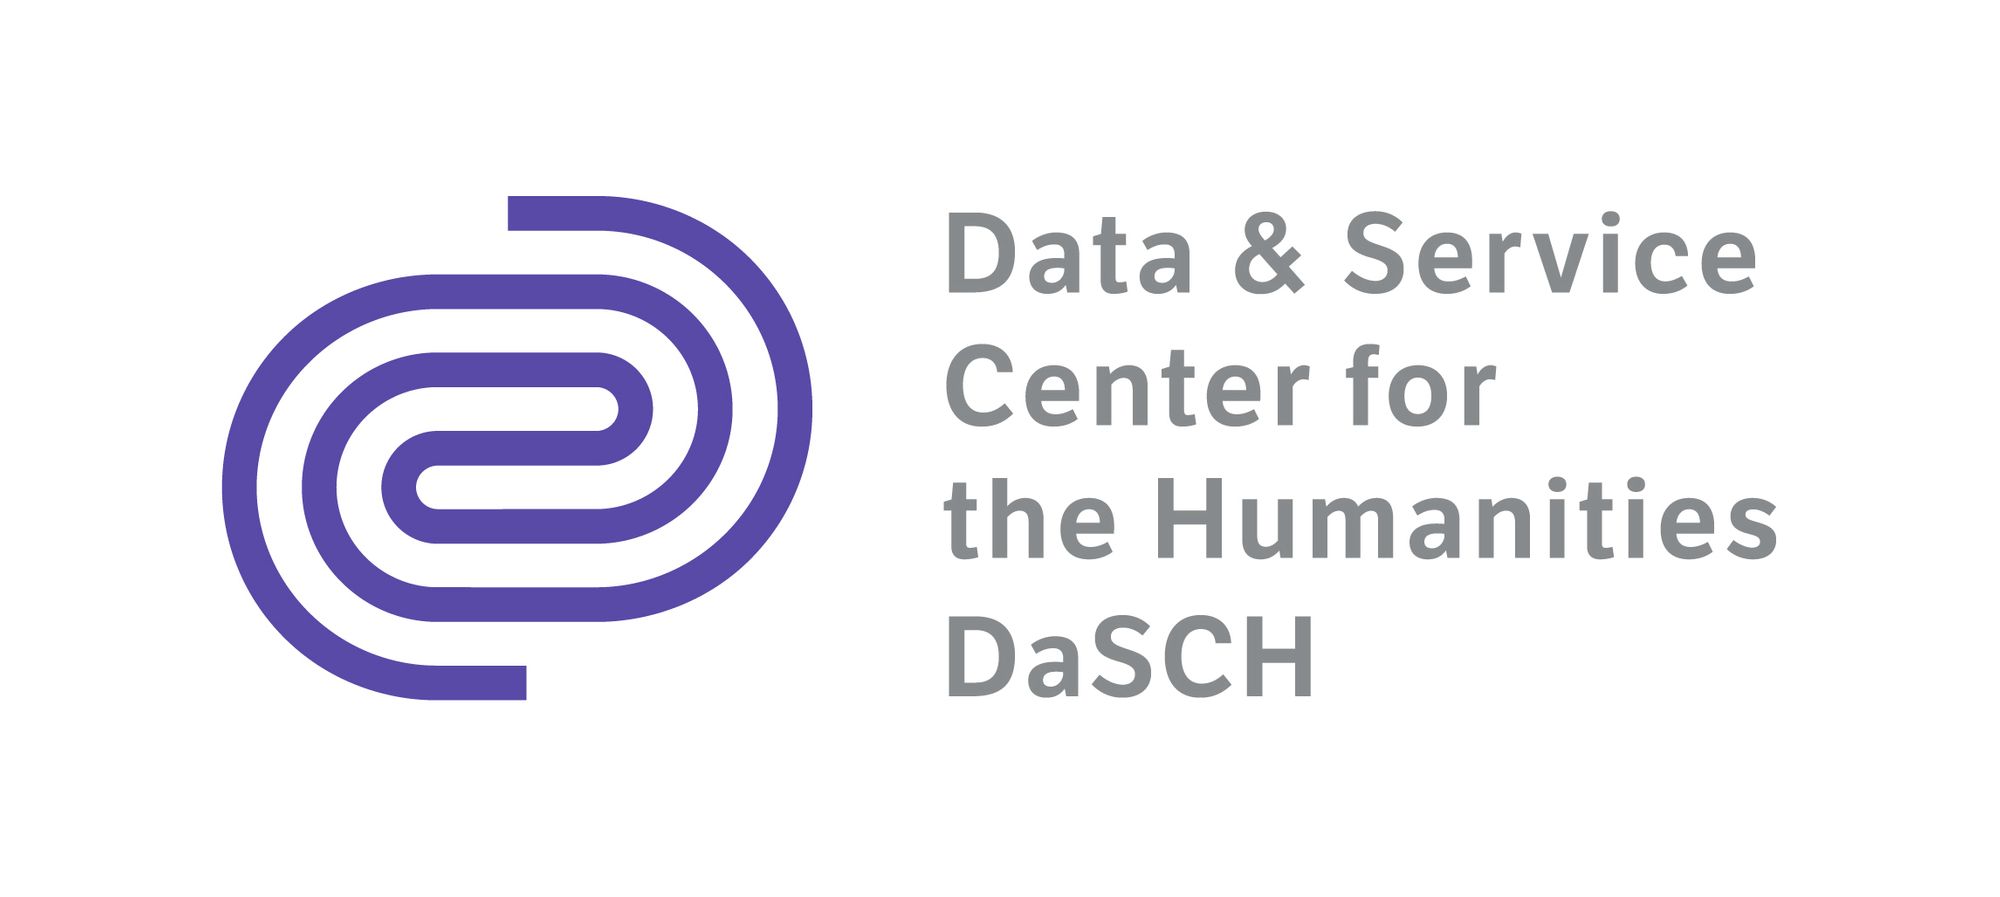 Data & Service Center for the Humanities (DaSCH), University of Basel logo